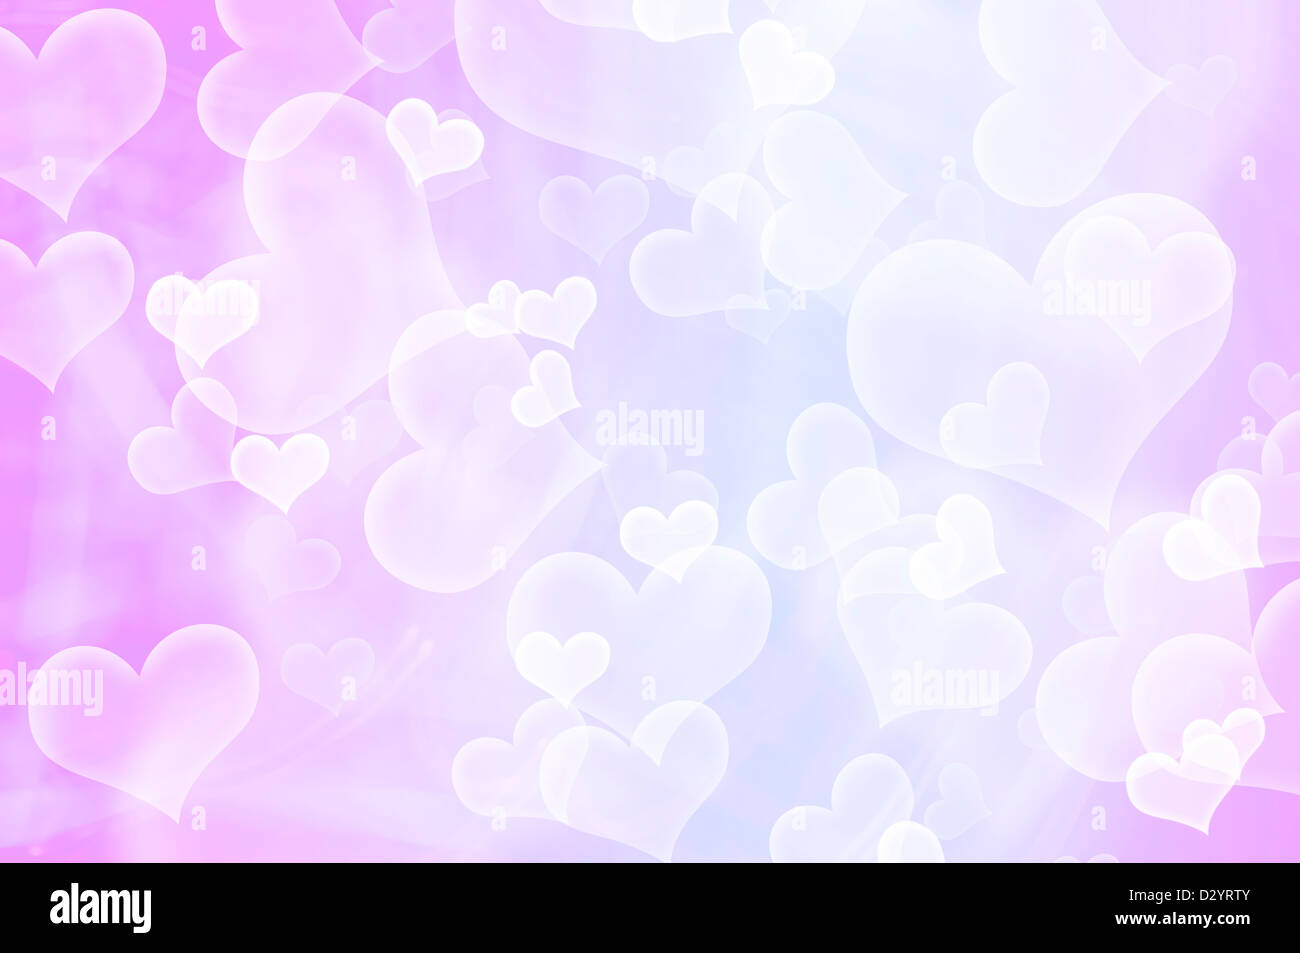 Blur heart background Stock Photo